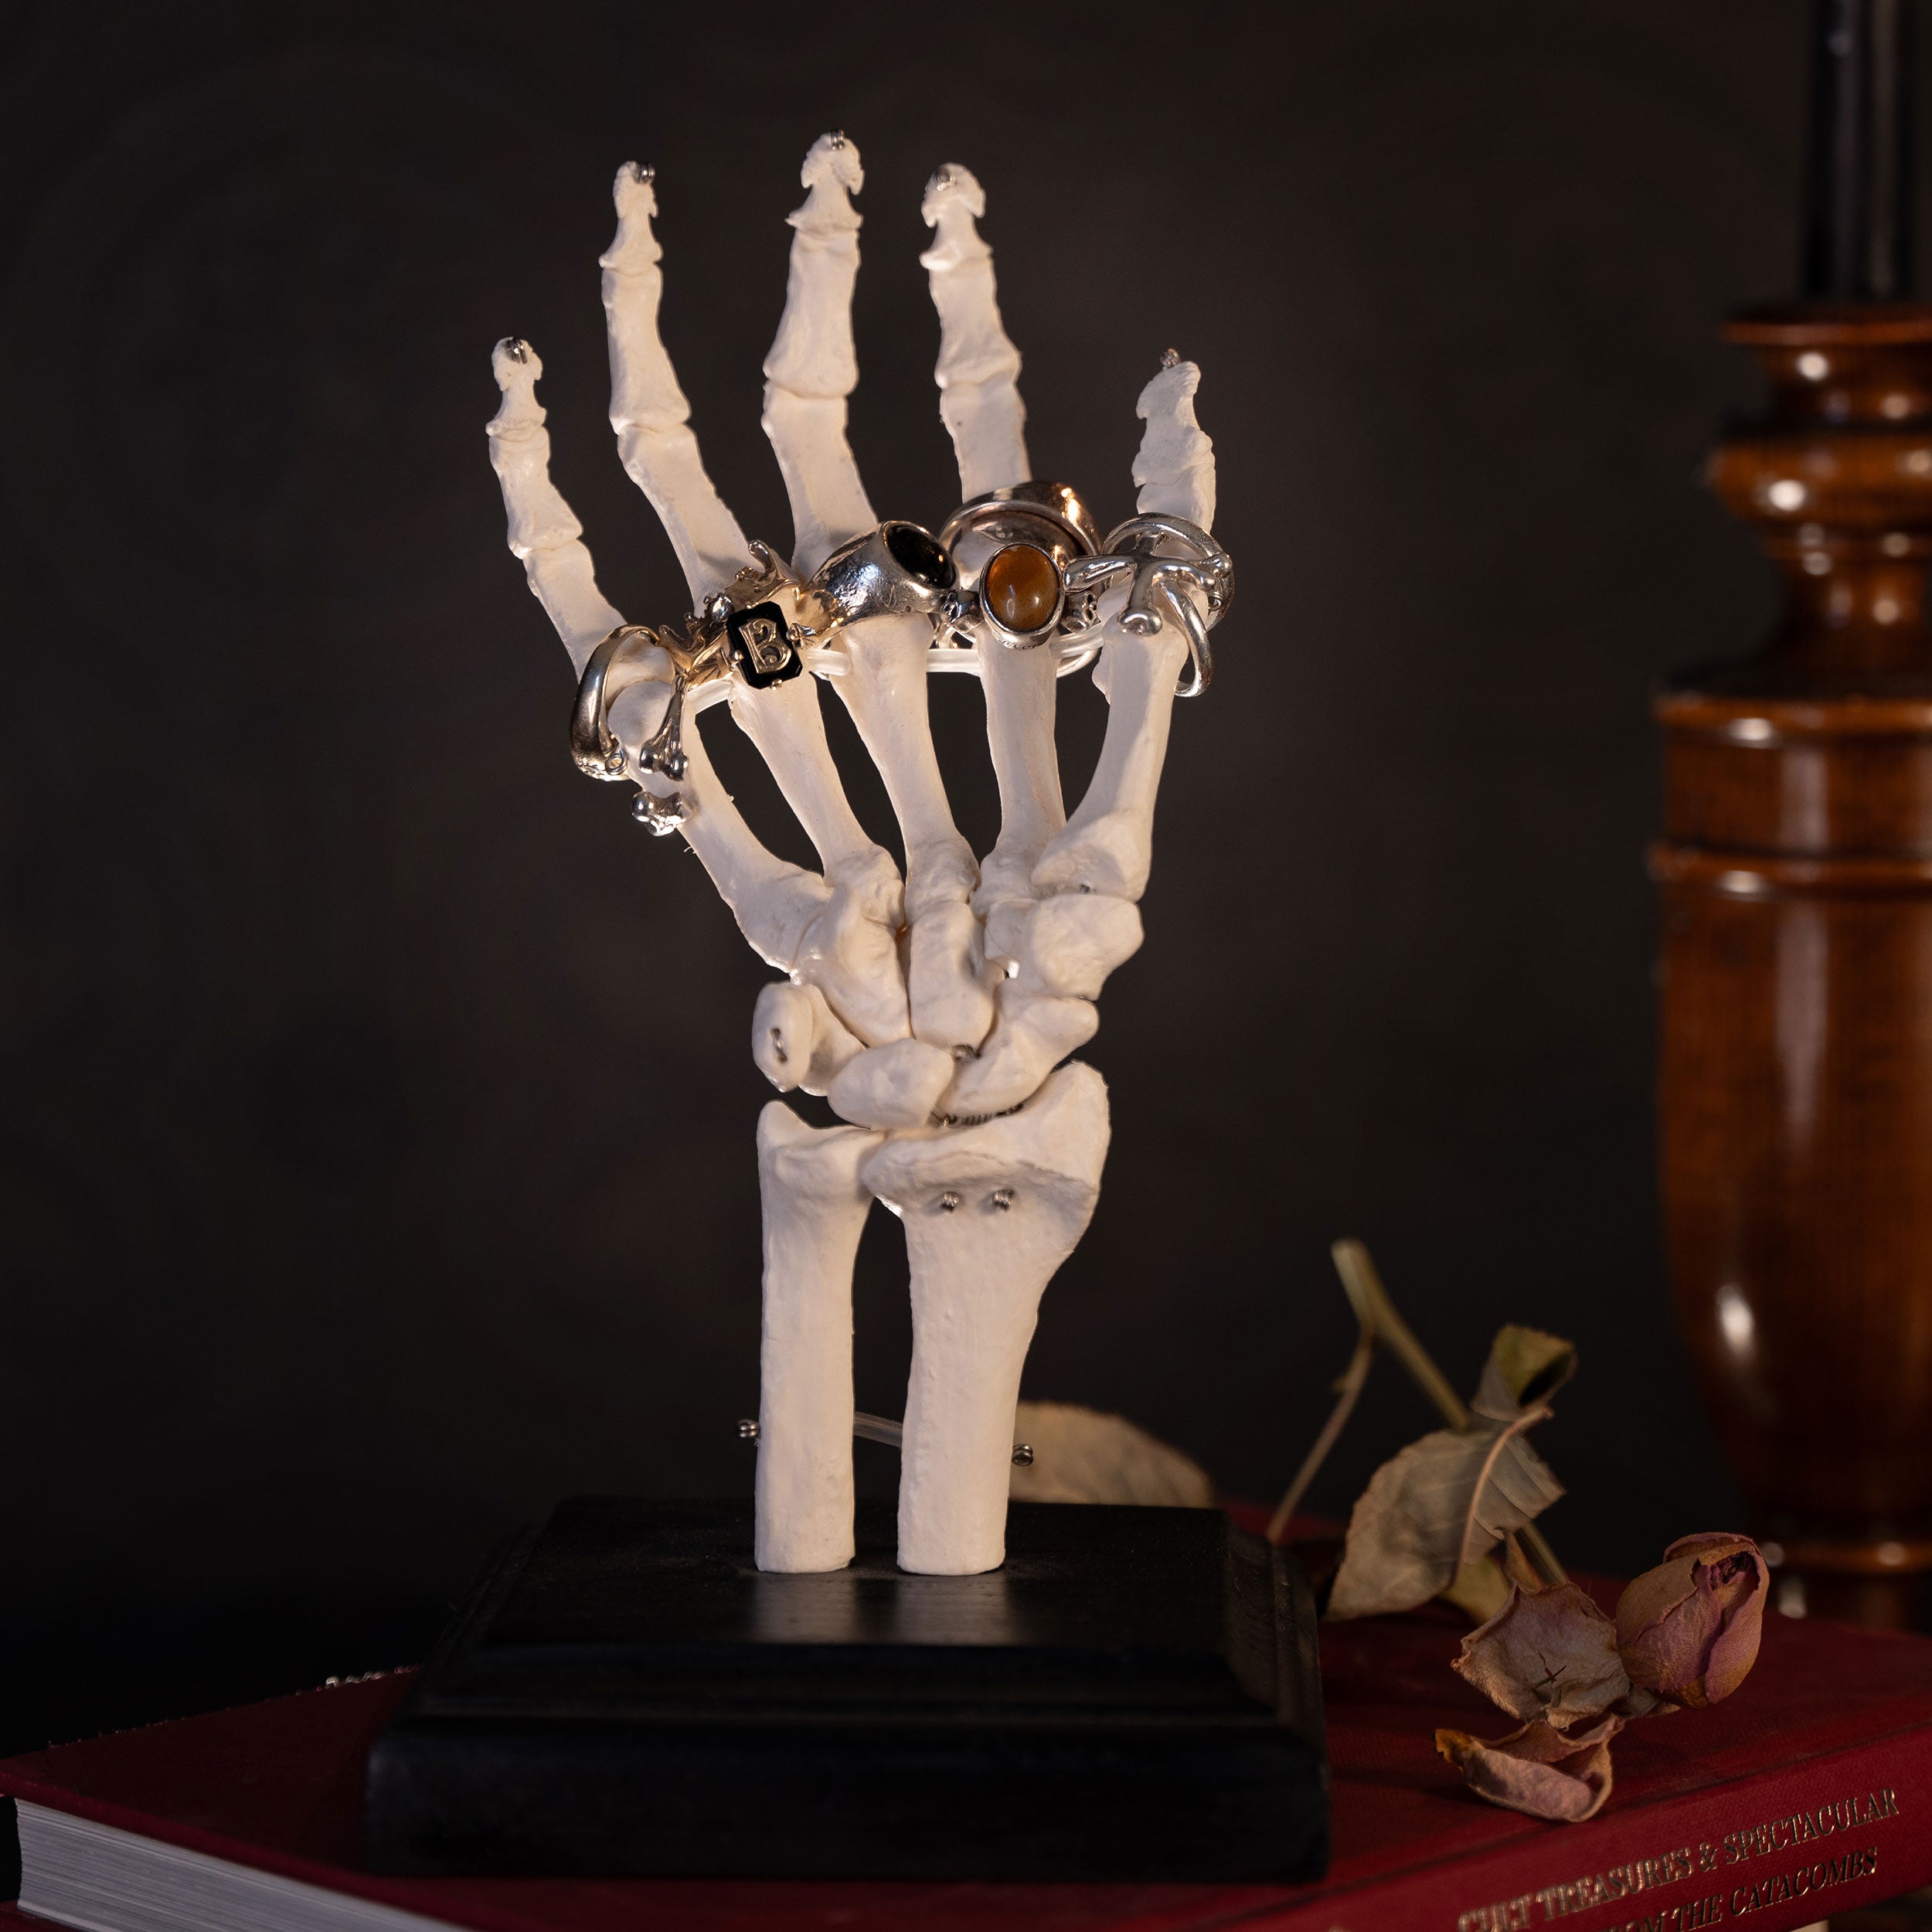 Skeleton jewellery stand - The Blackened Teeth - home decor